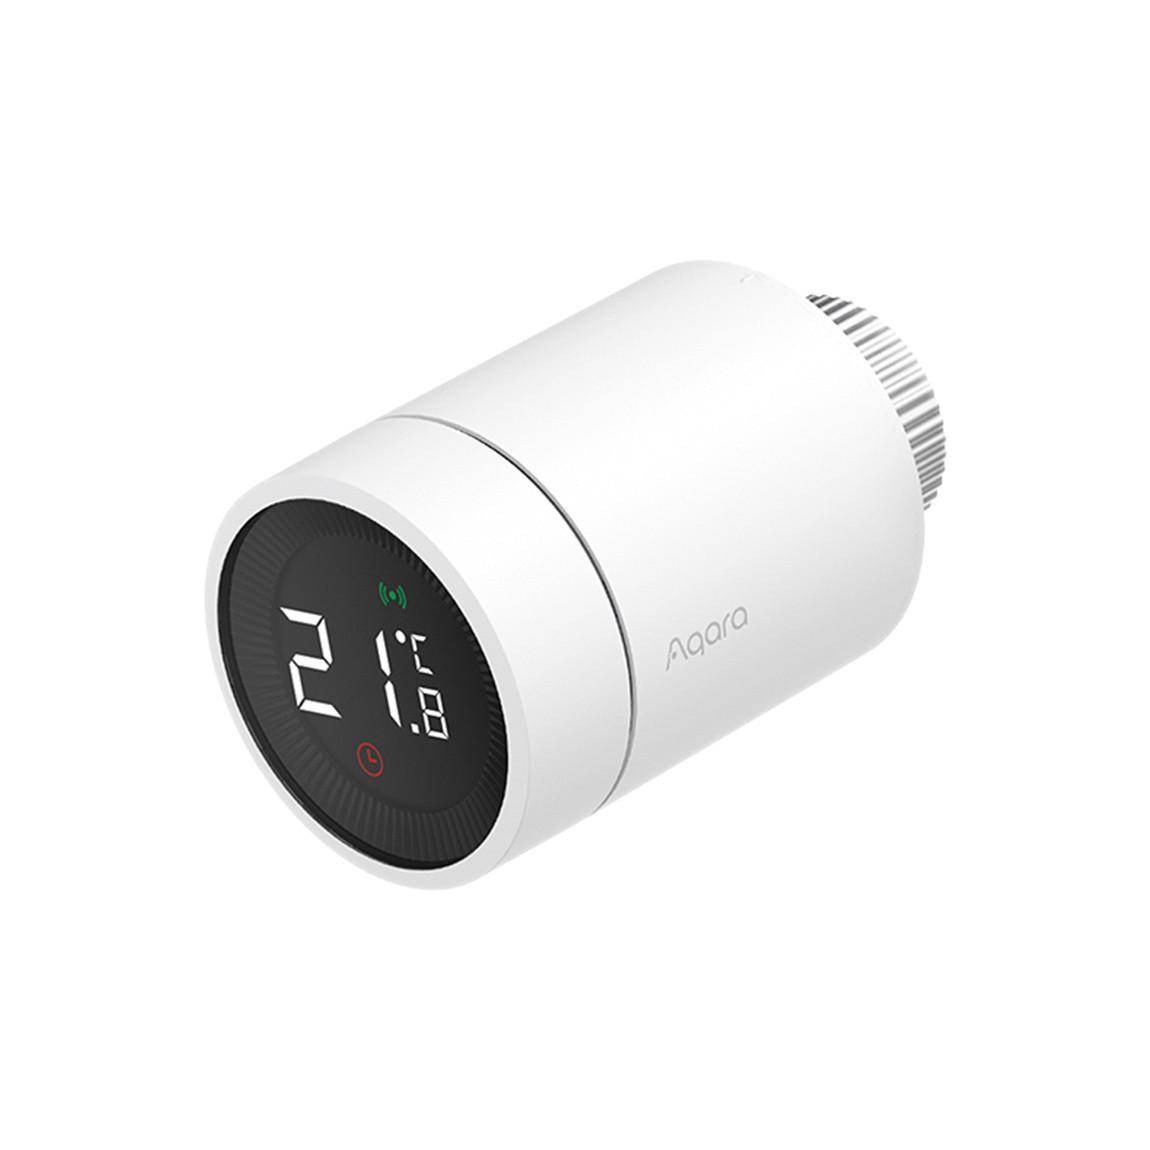 Aqara Radiator Thermostat E1 - Smartes Heizkörperthermostat - Weiß